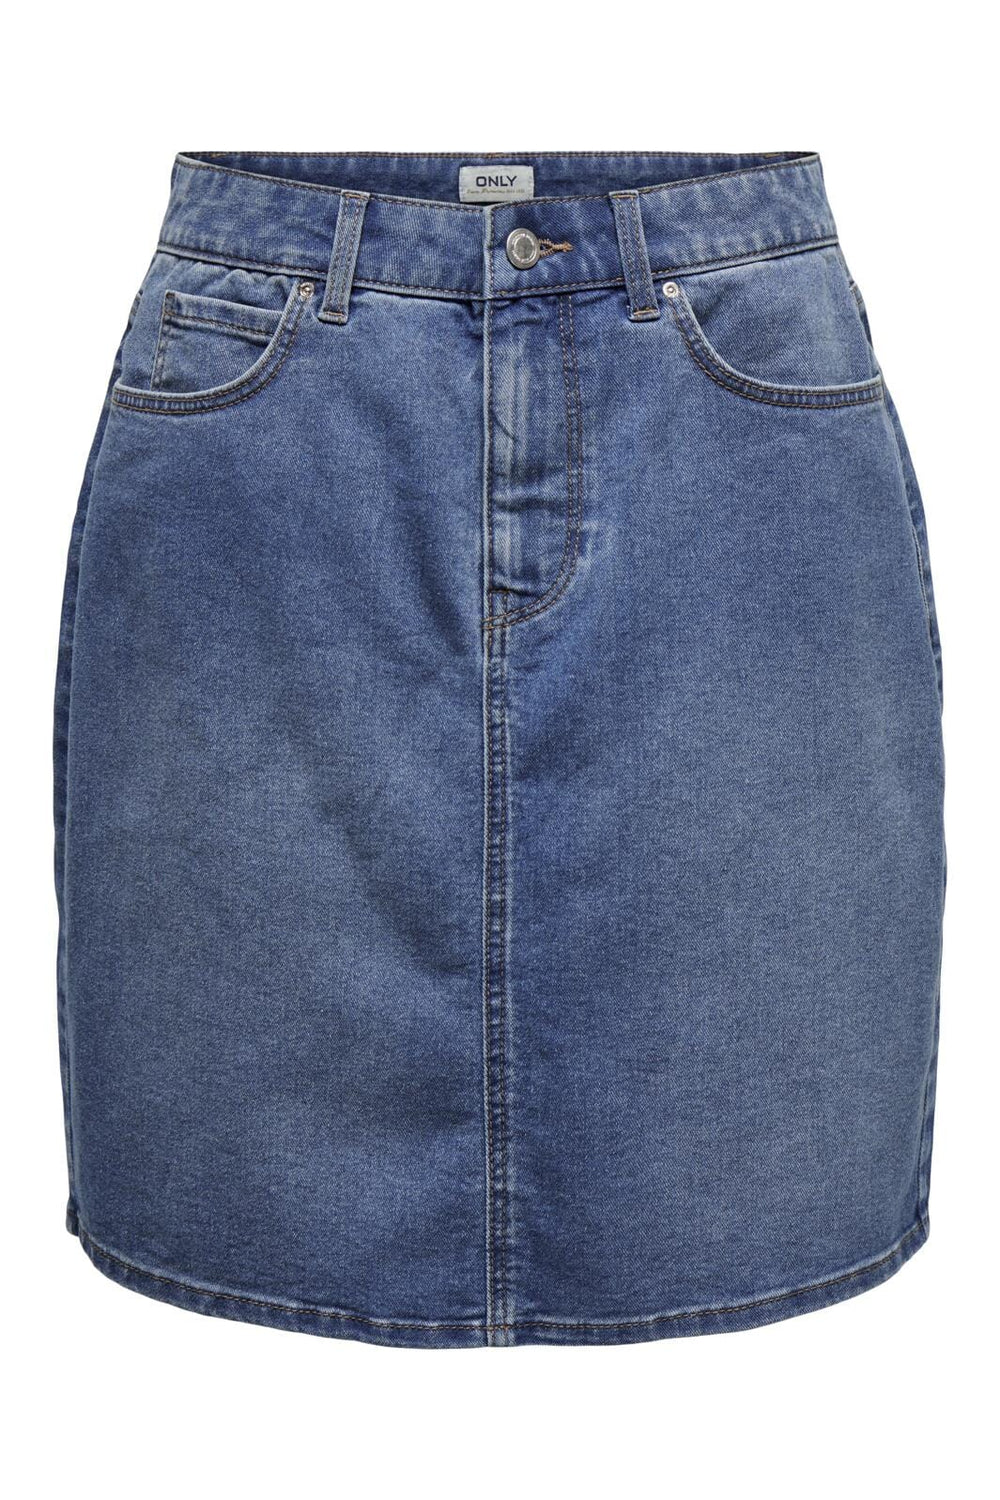 Only - Onlwonder Skirt Pim - 4522708 Medium Blue Denim